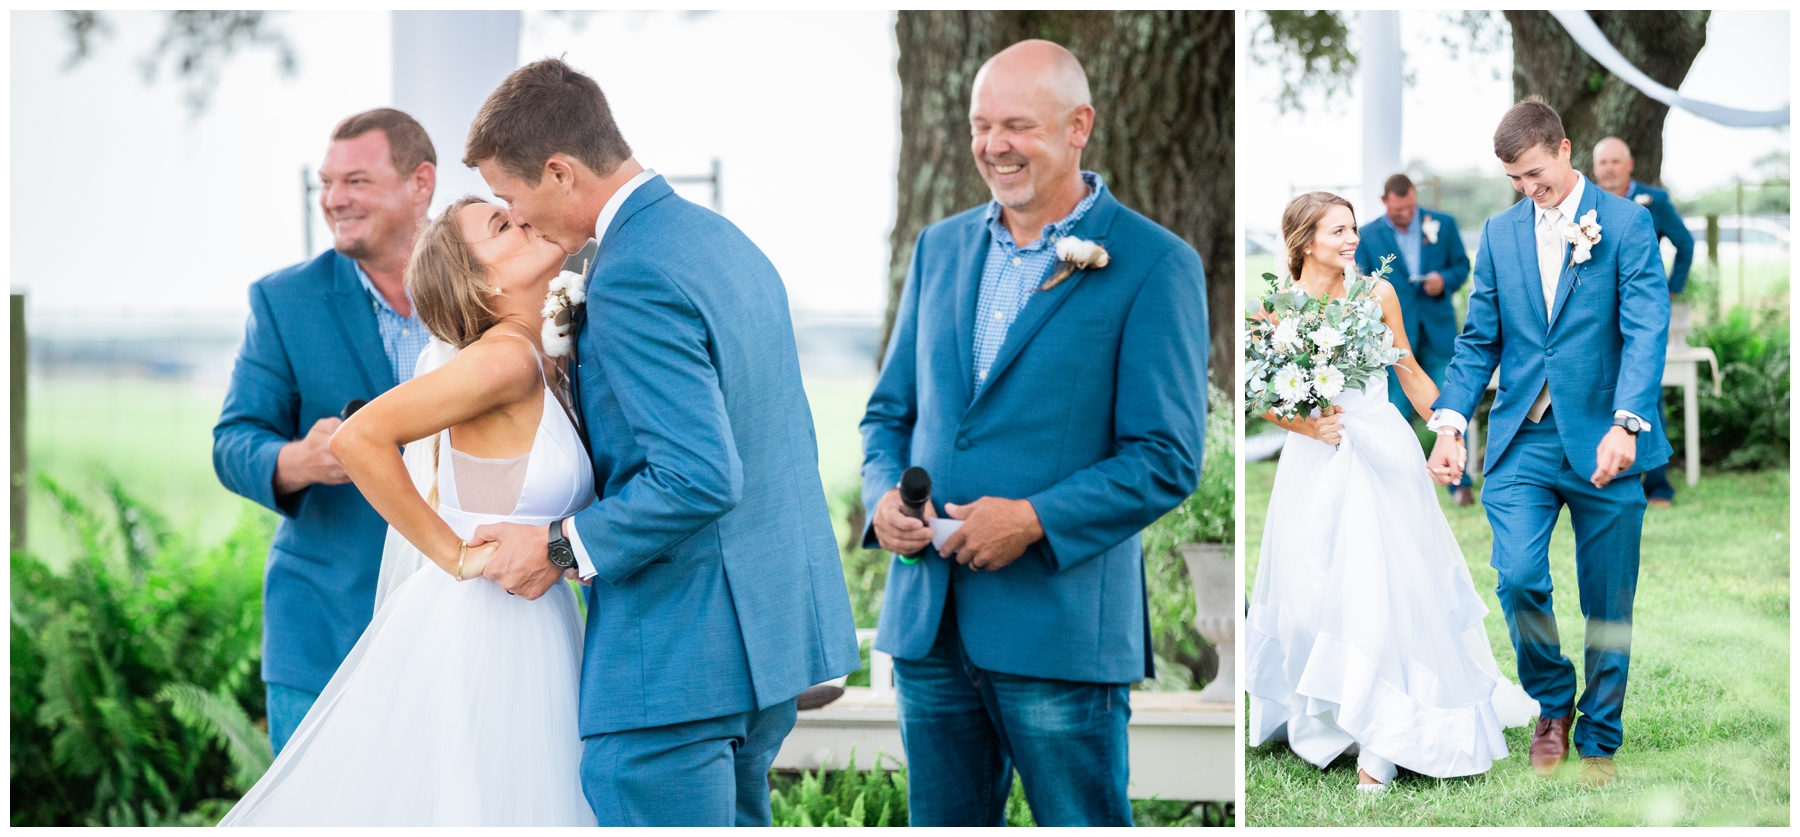 Atlanta_Georgia_Wedding_Photographer_Outdoor Ceremony_Summertime_Blush and Blue Wedding_Rustic